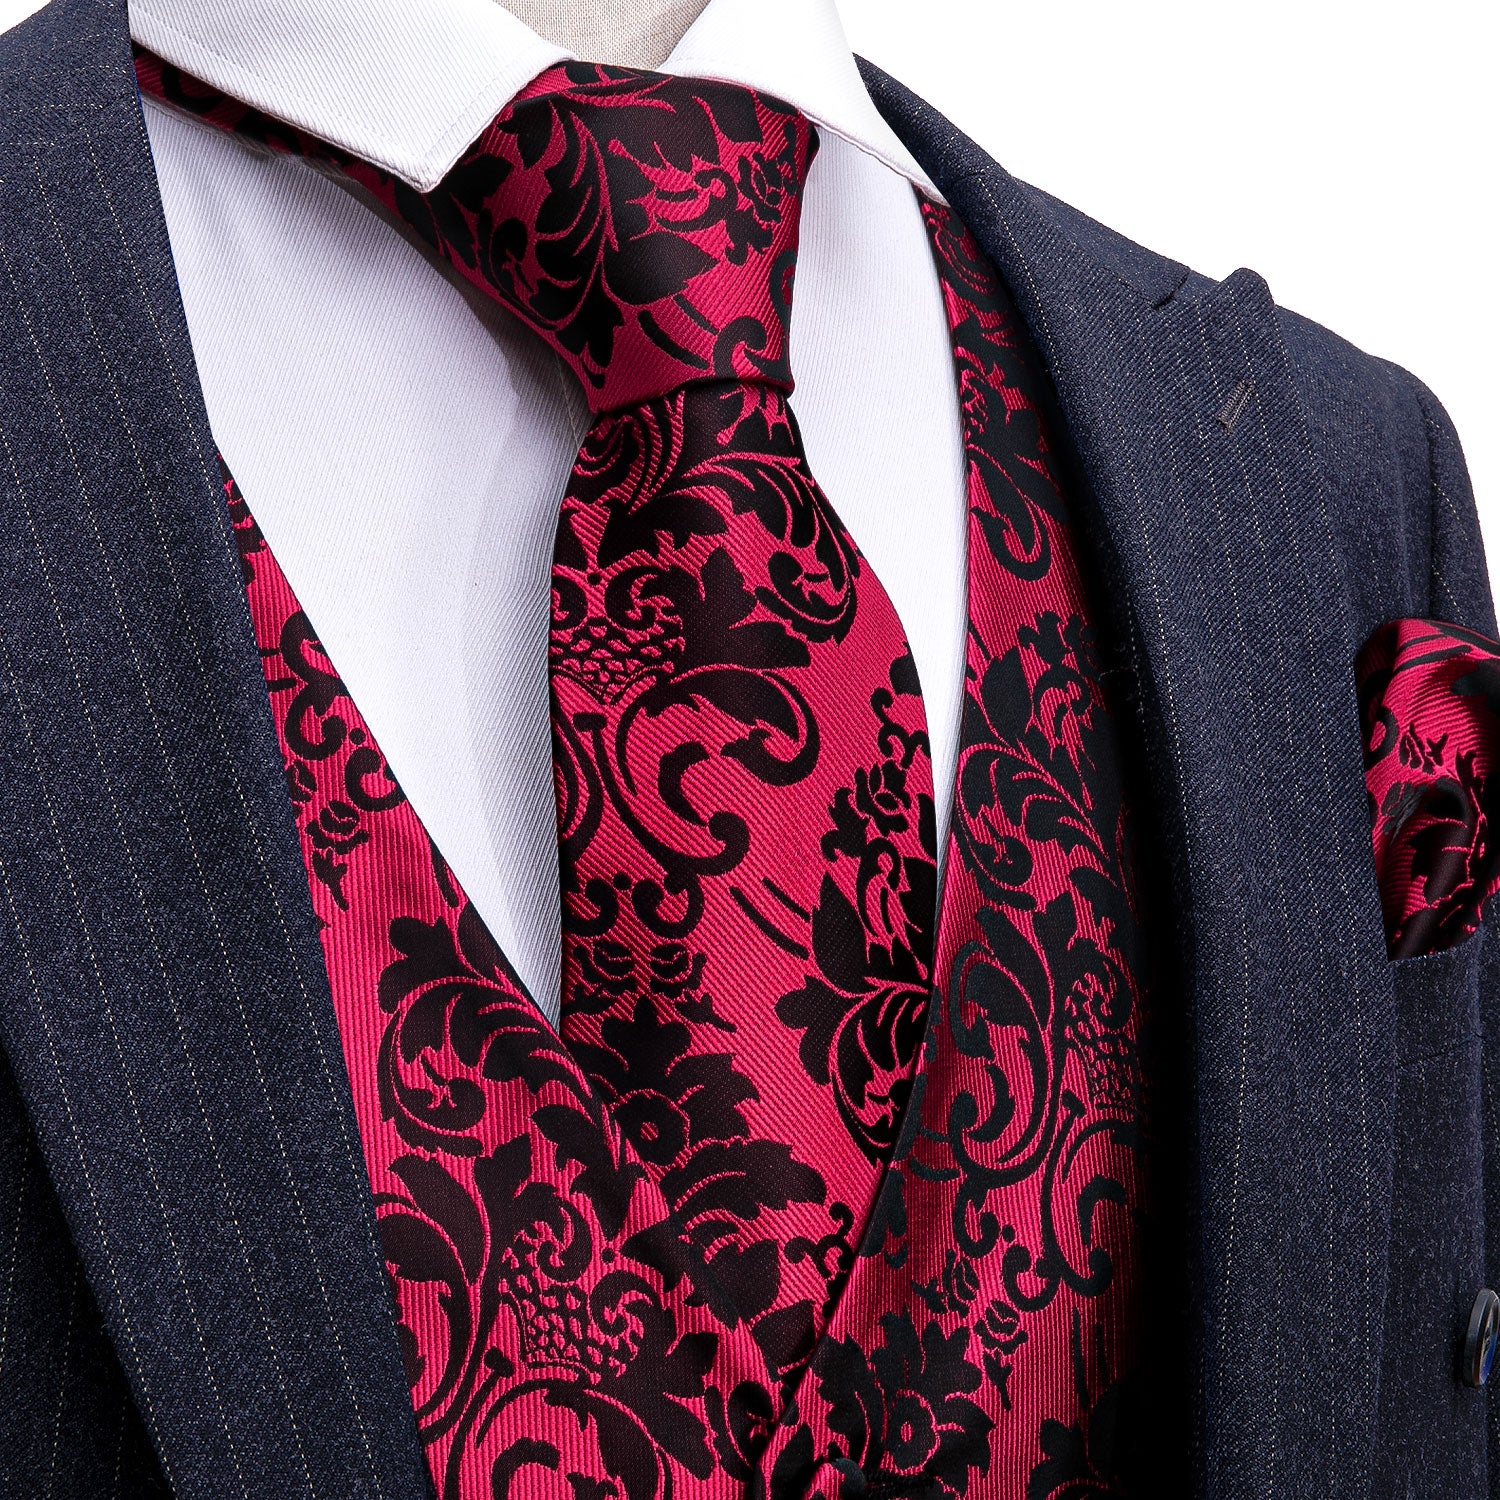 Men's Black Red Paisley Silk Vest Necktie Pocket square Cufflinks